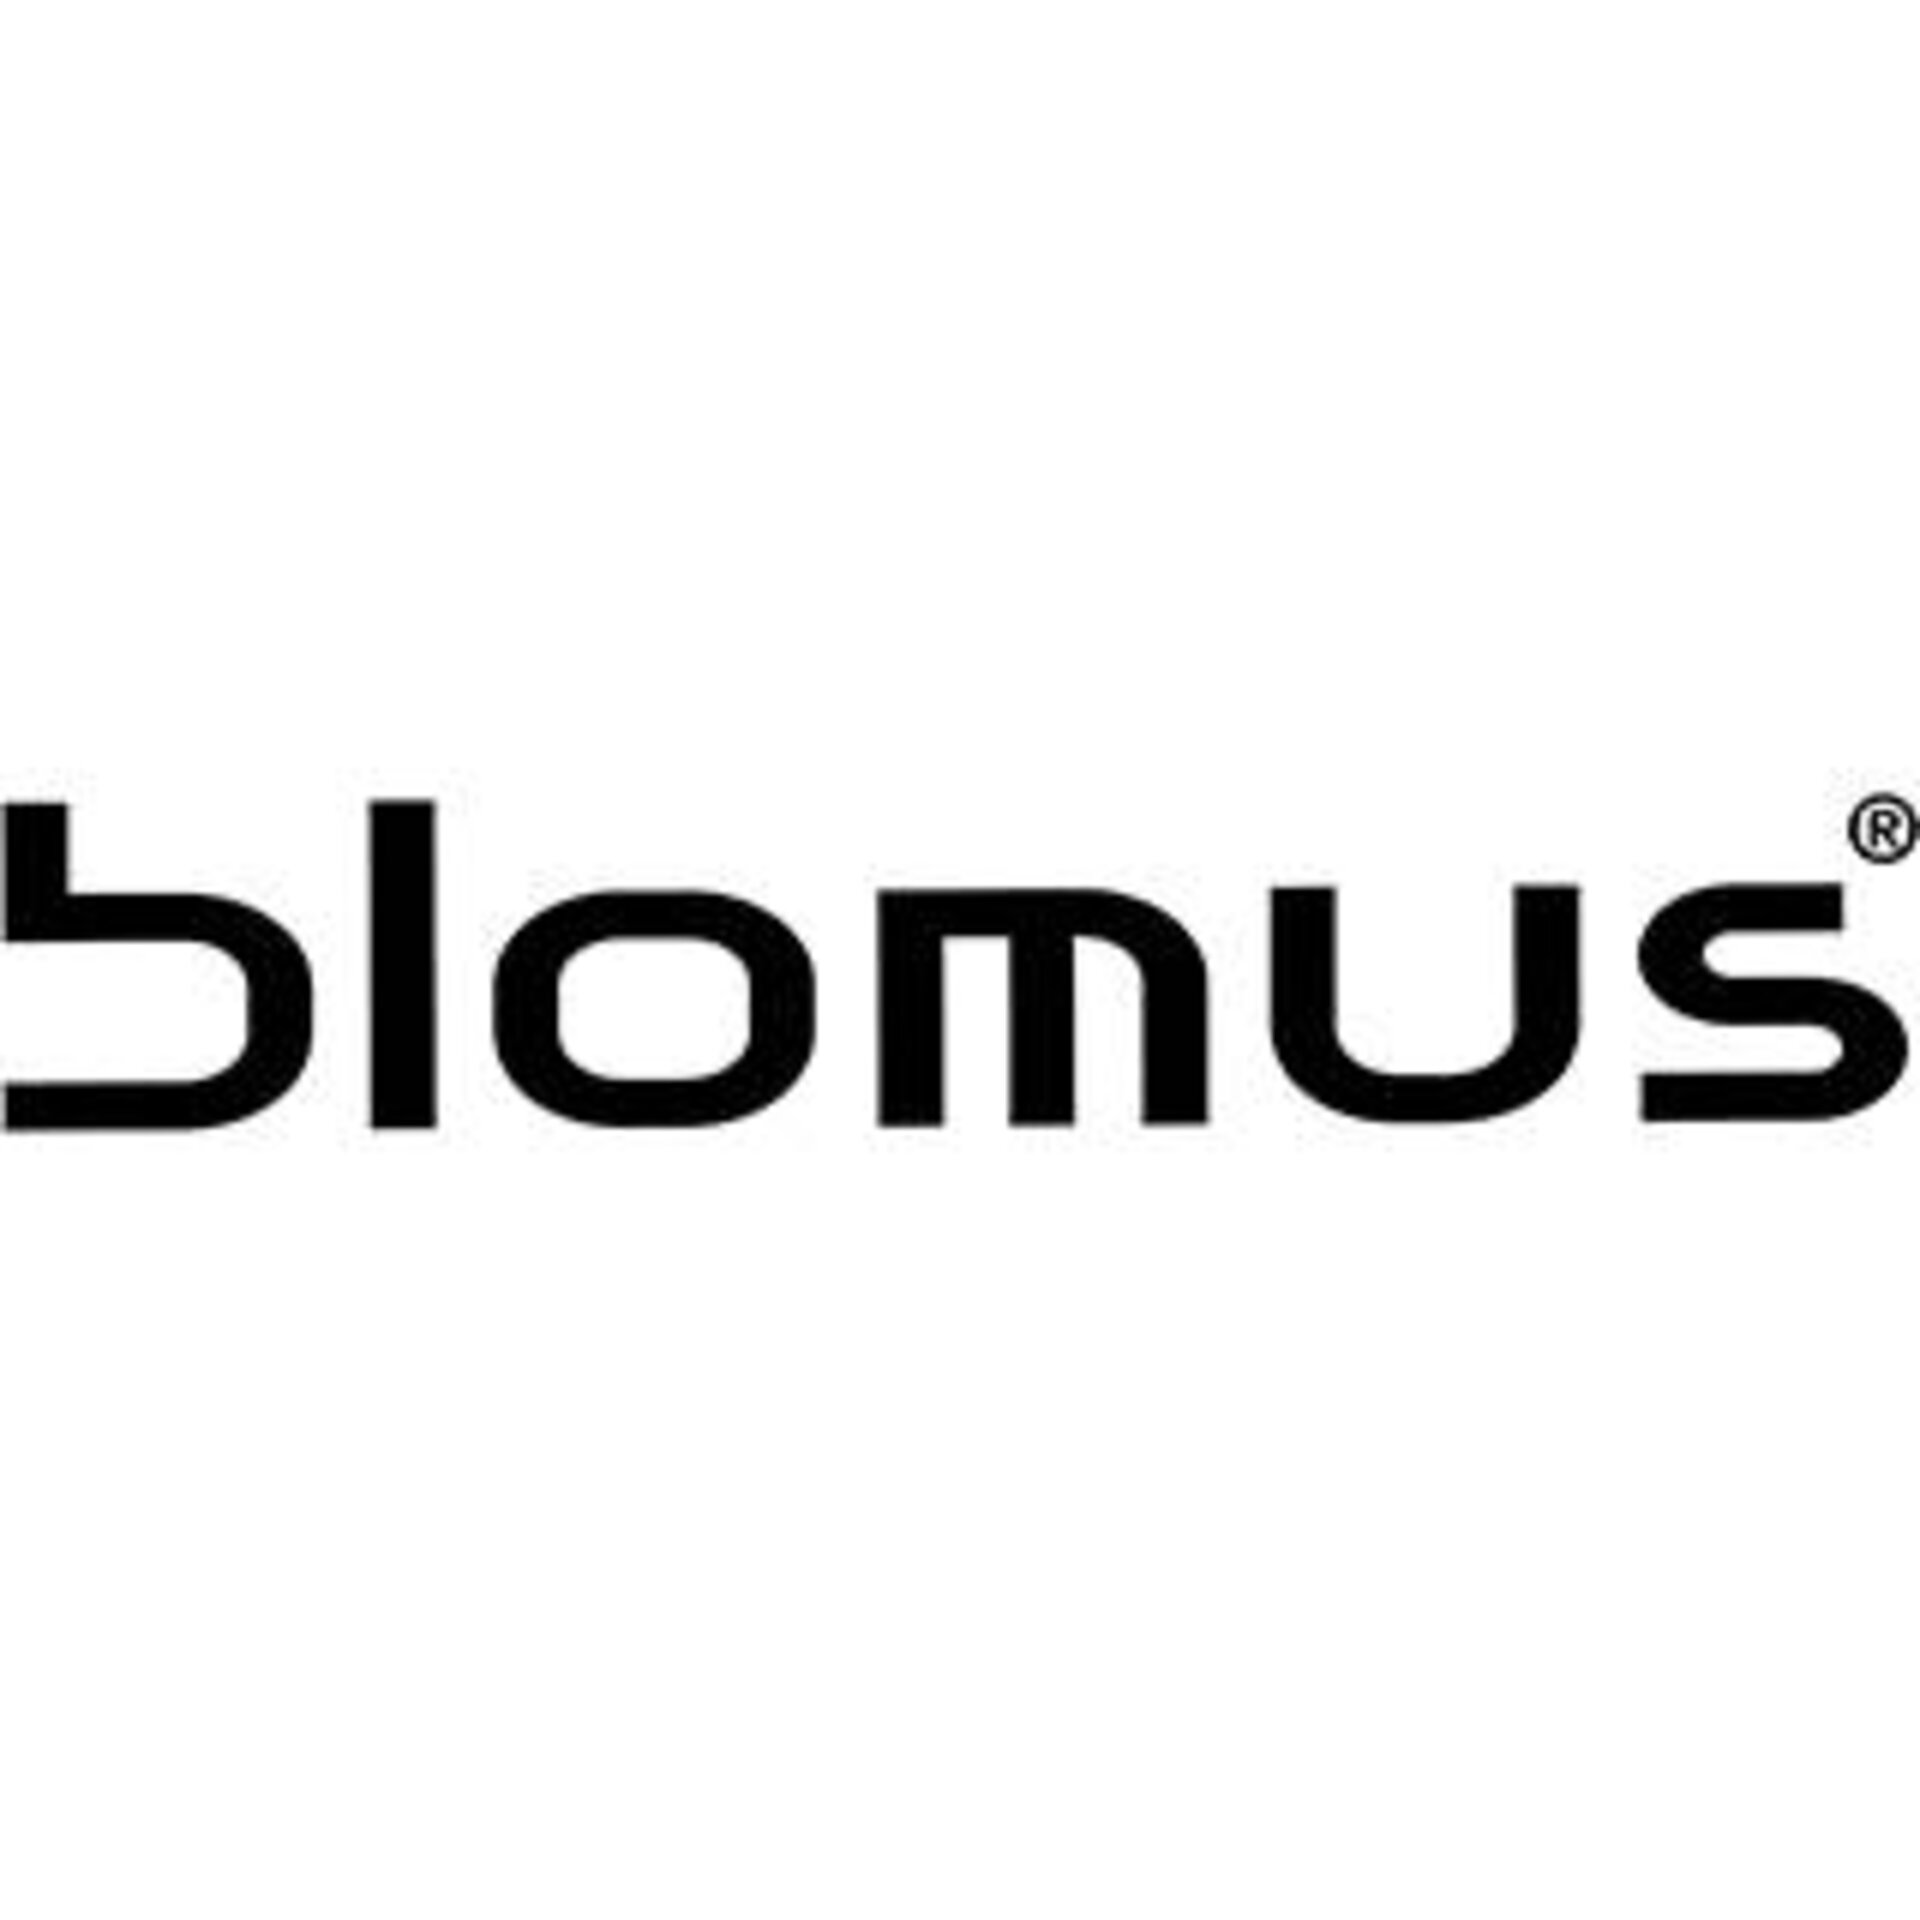 blomus Logo